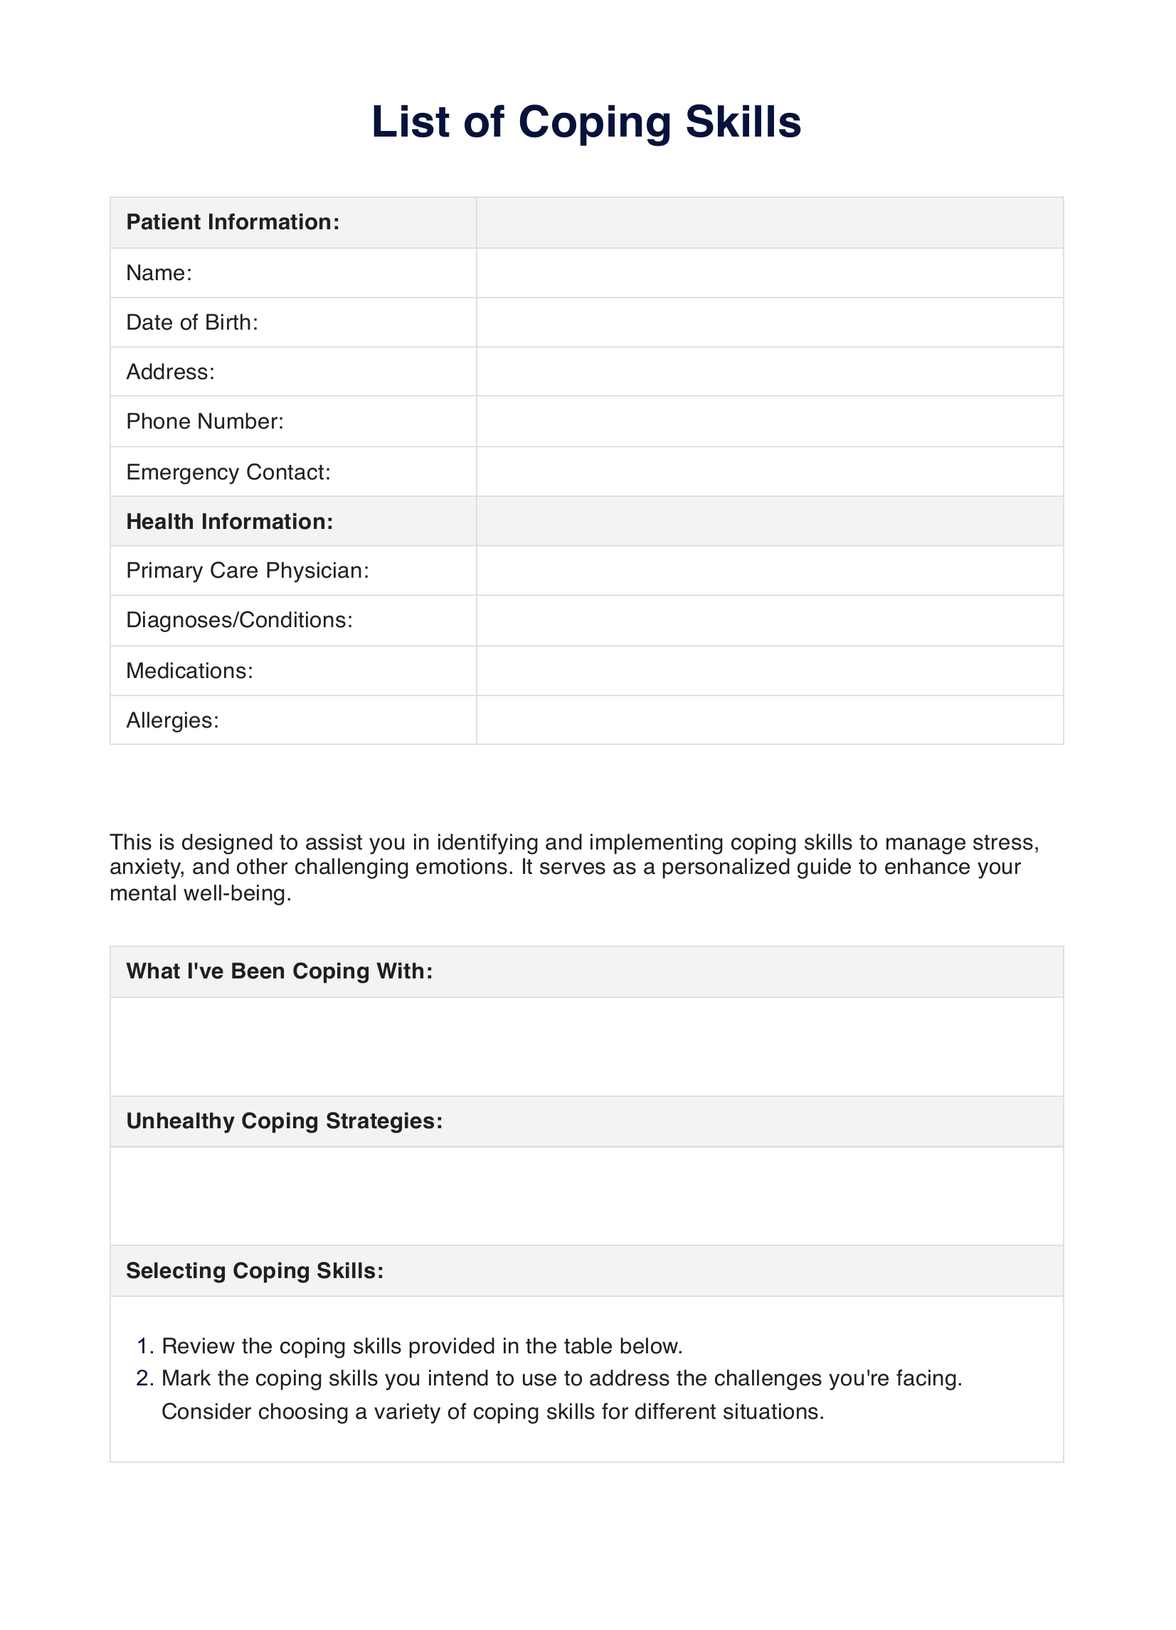 List of Coping Skills PDF PDF Example